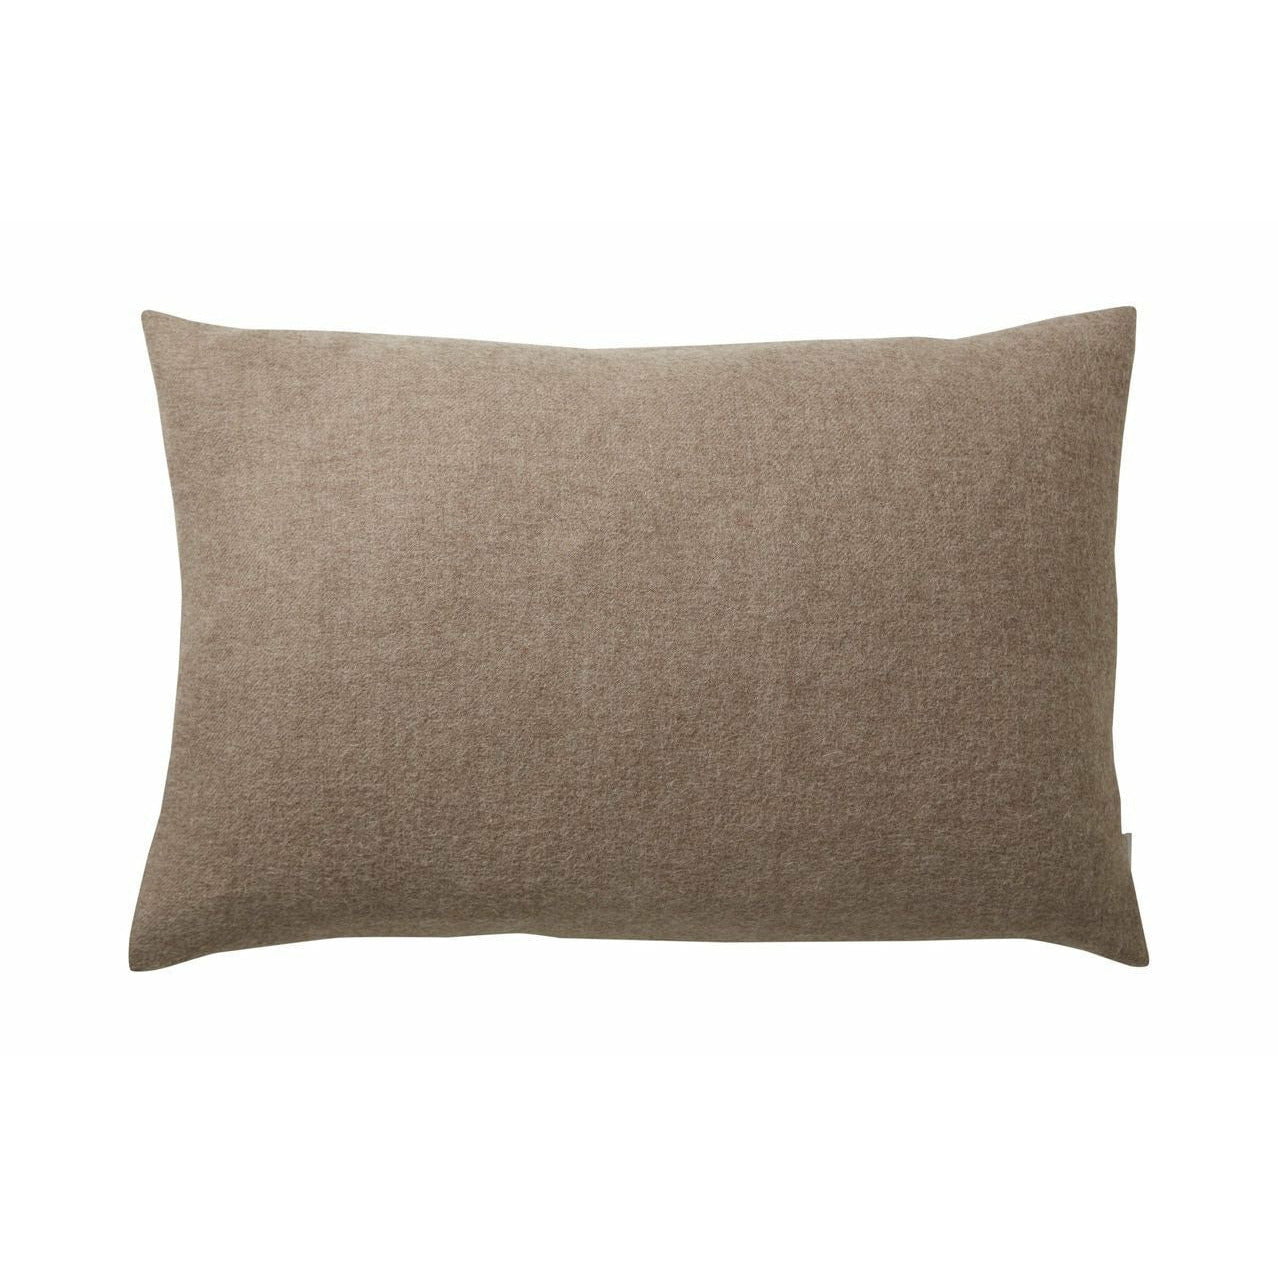 Silkorg Uldspinderi Arequipa Cushion 60 x40 cm, nogal marrón